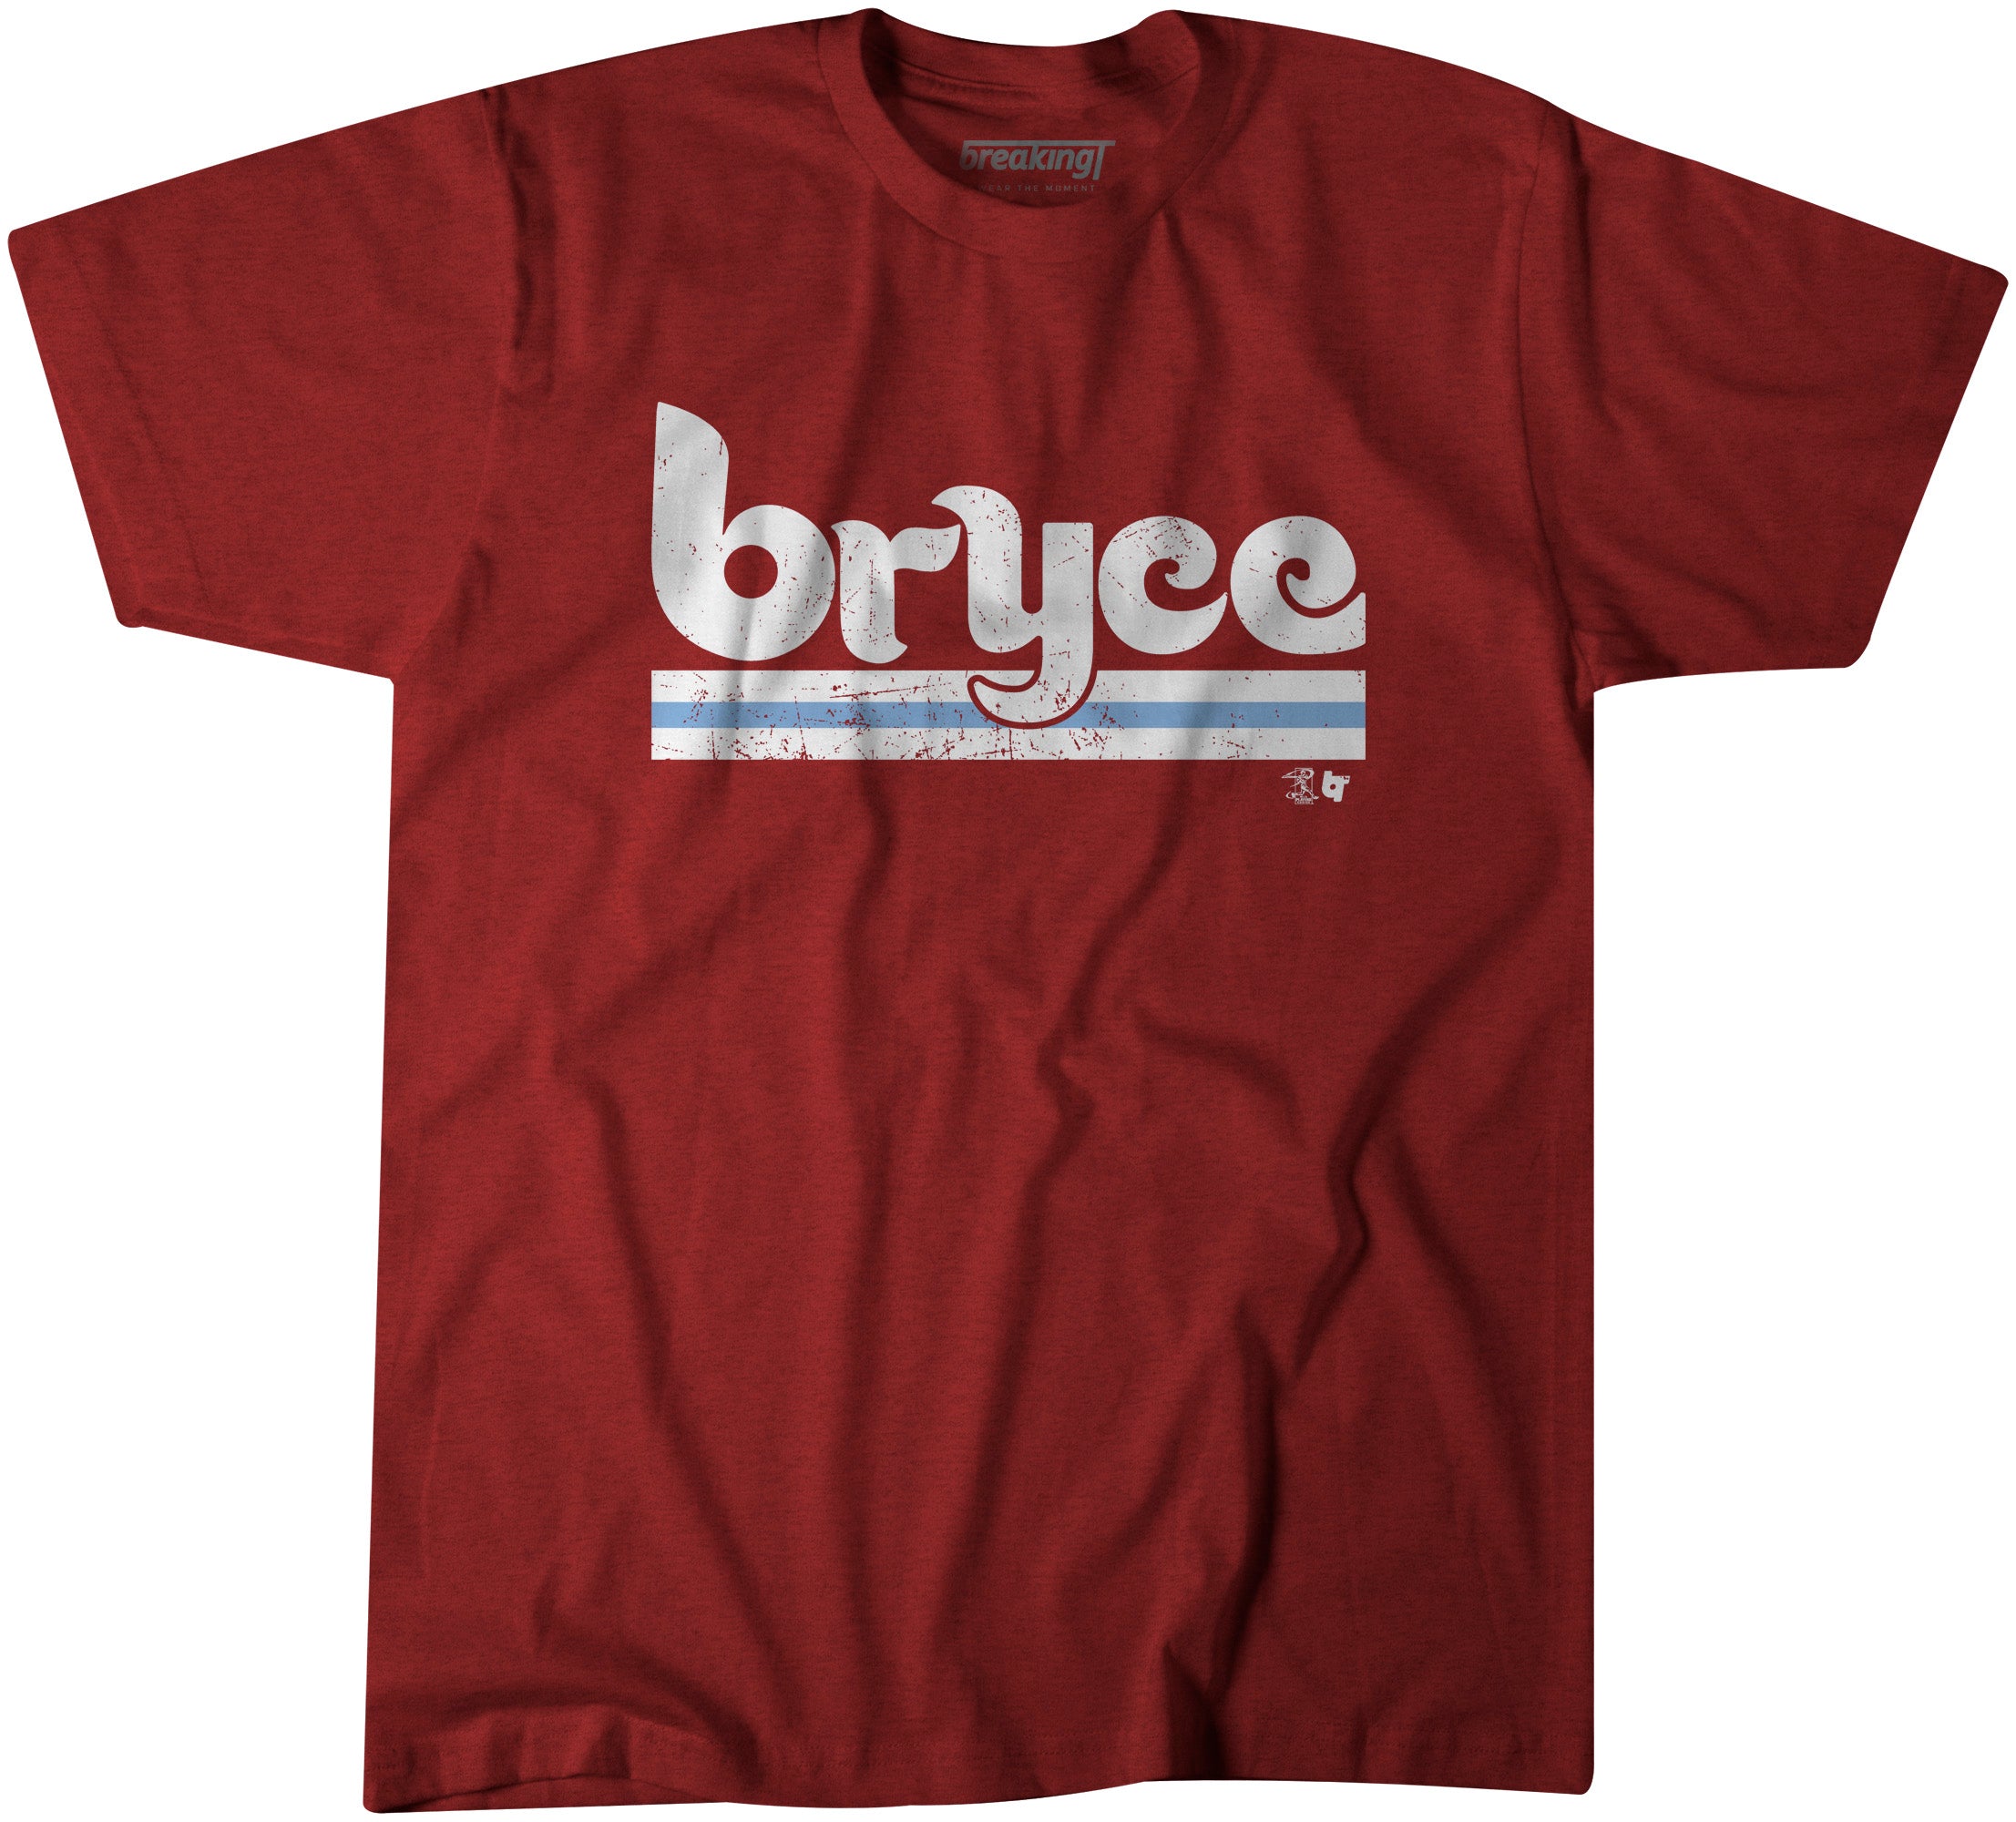 Bryce Harper Philadelphia Phillies Youth Red Backer Long Sleeve T-Shirt 